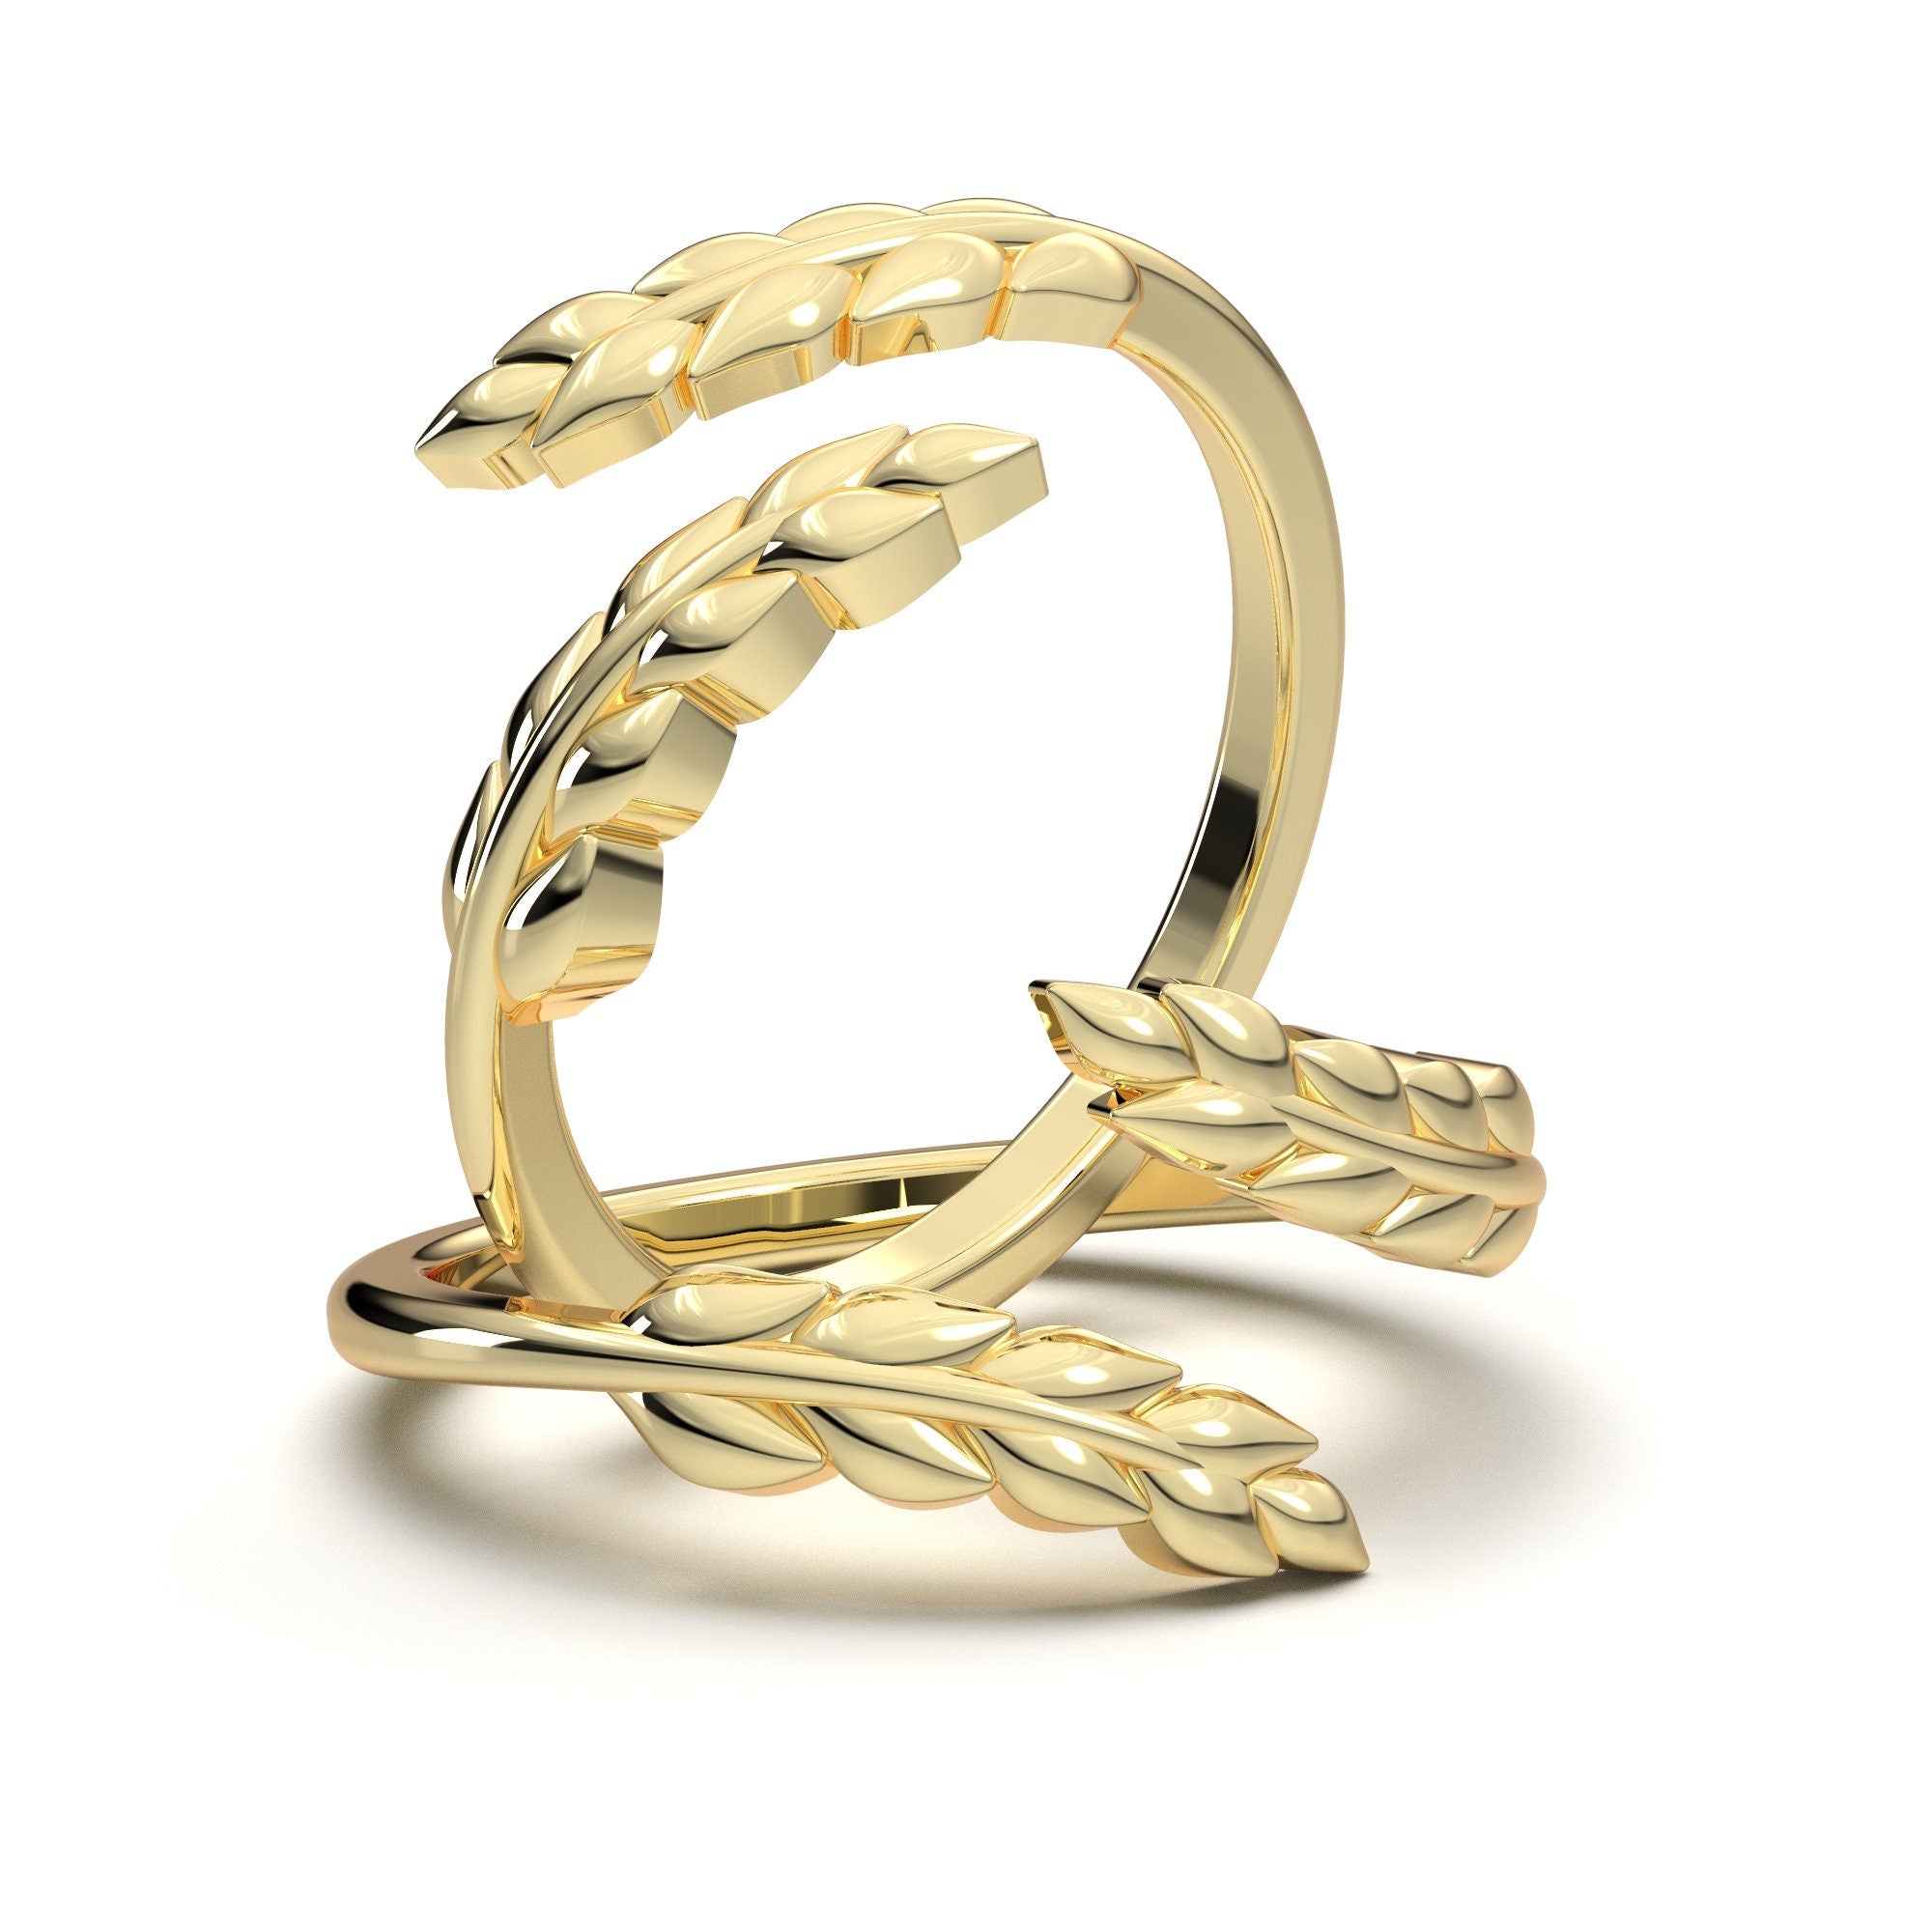 Buy 14k gold ladies ring 483da223 Online from Vaibhav Jewellers